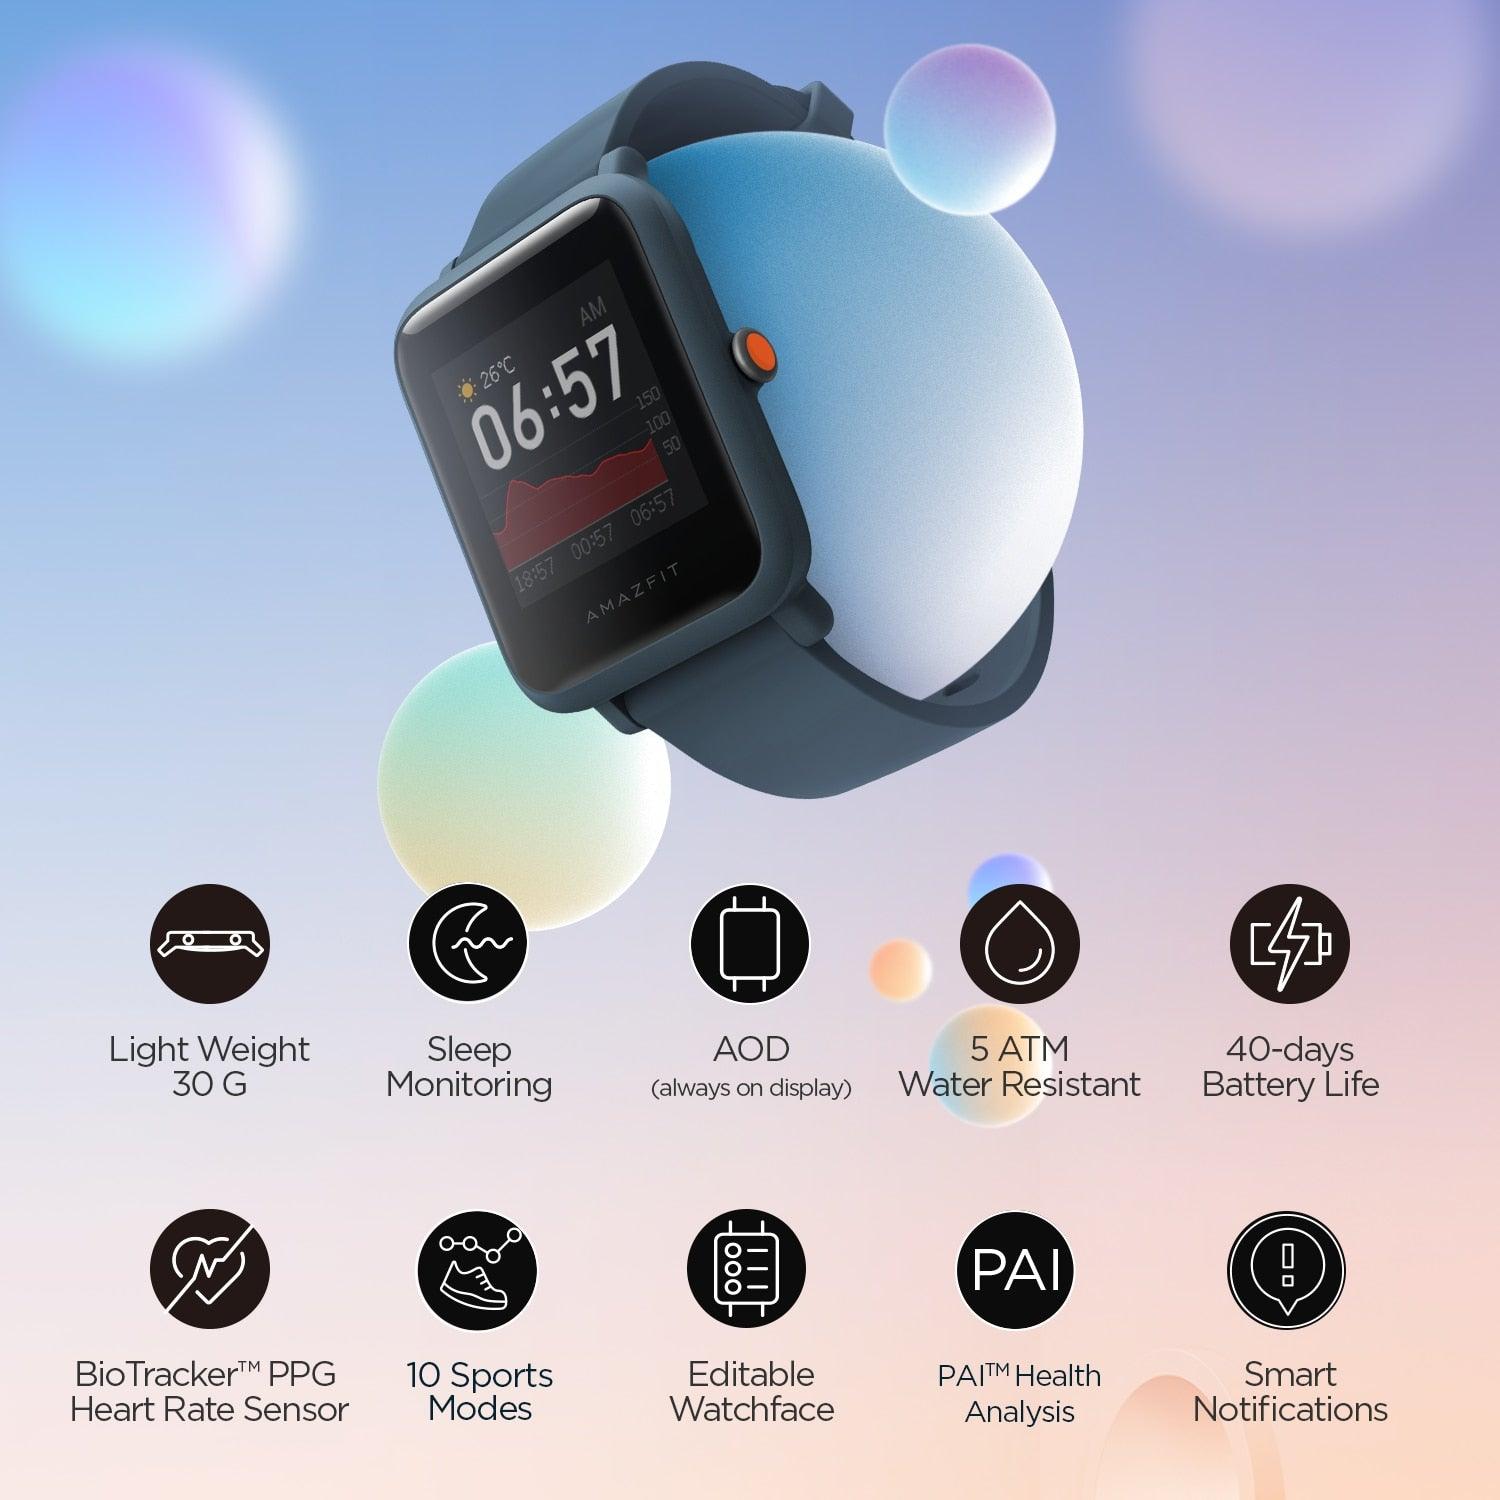 Amazfit Bip S Lite Sports Smartwatch - 5ATM Waterproof